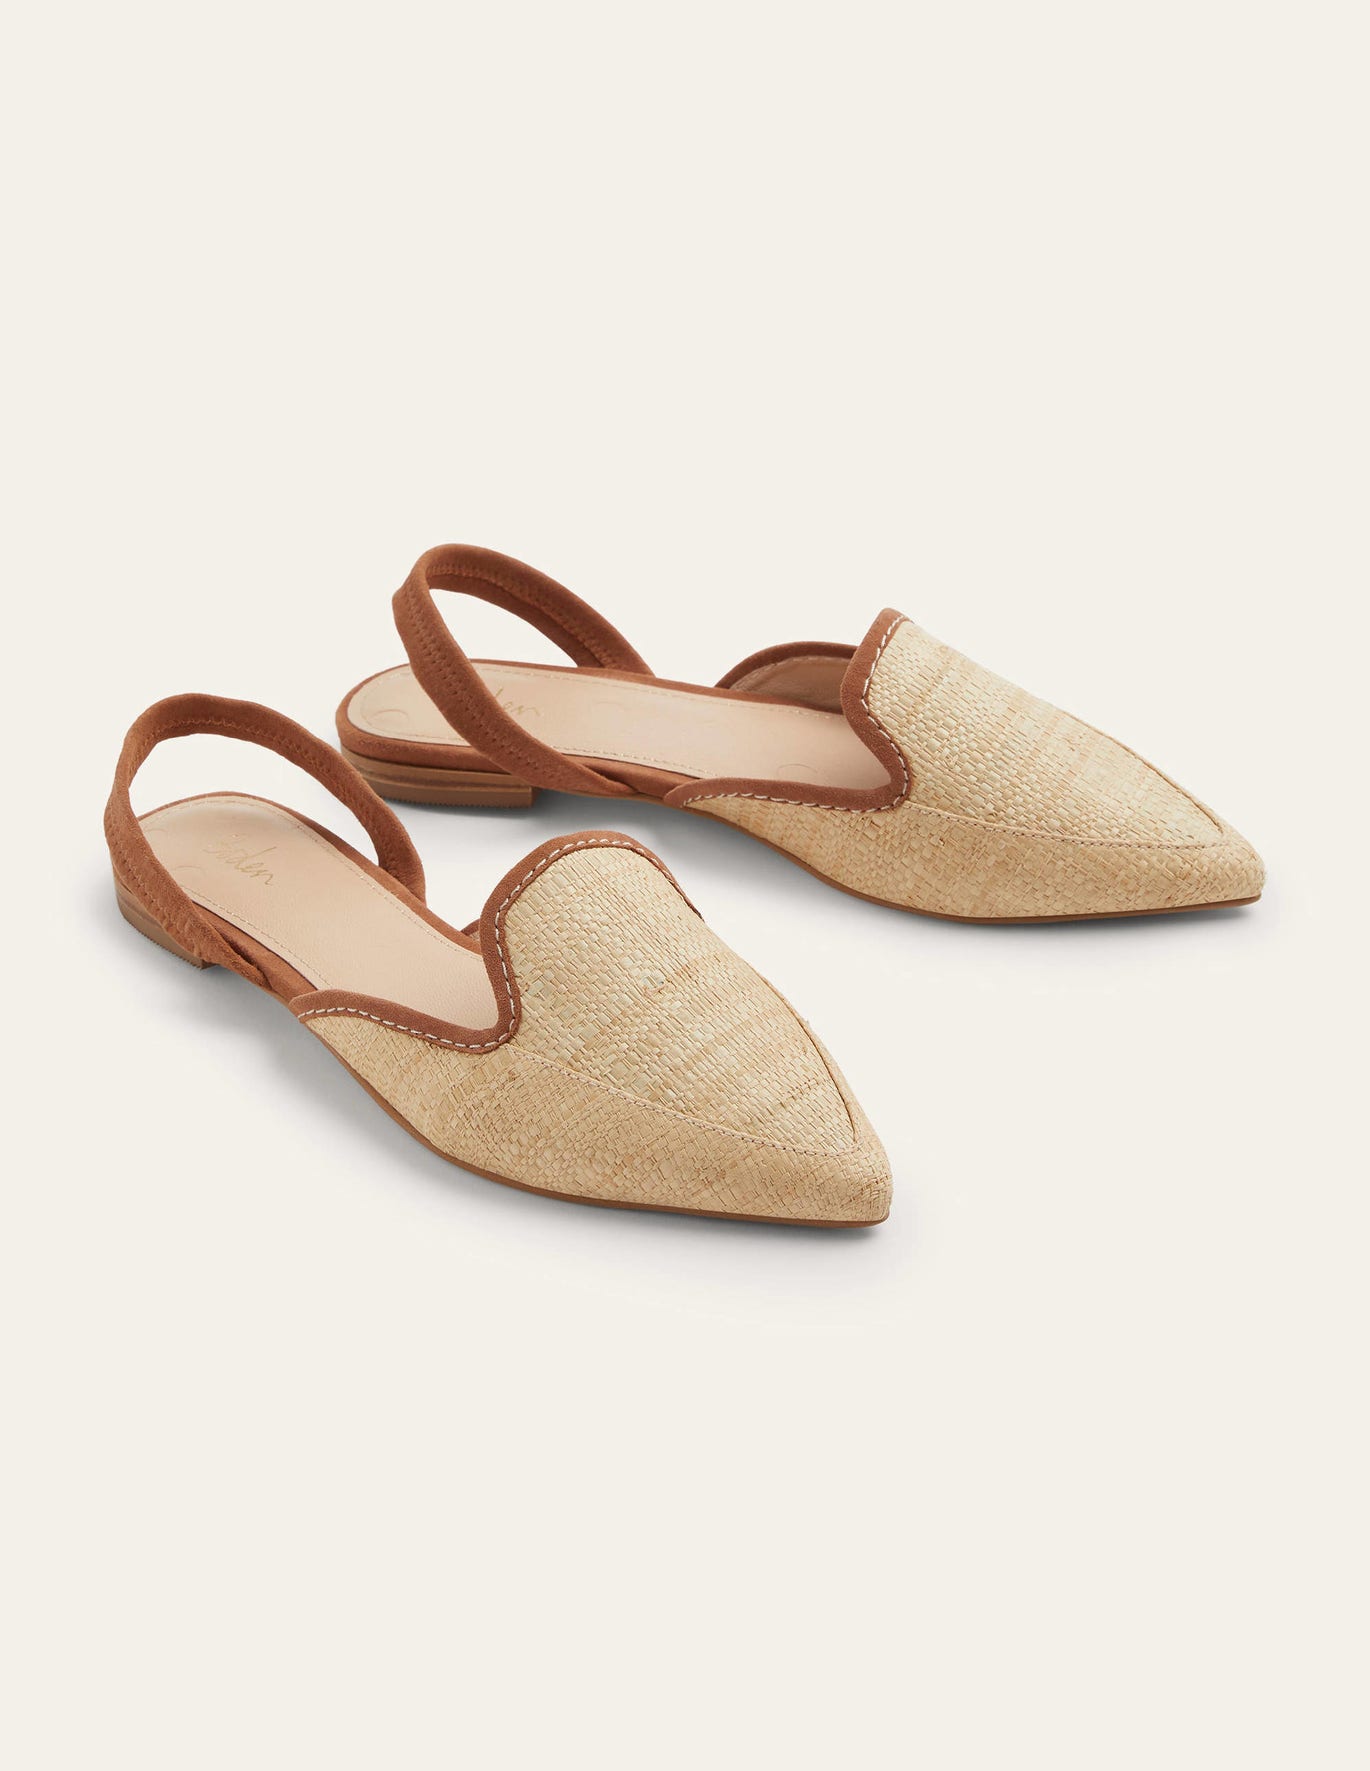 Boden Lily Slingback Flat Sandals - Natural/ Tan